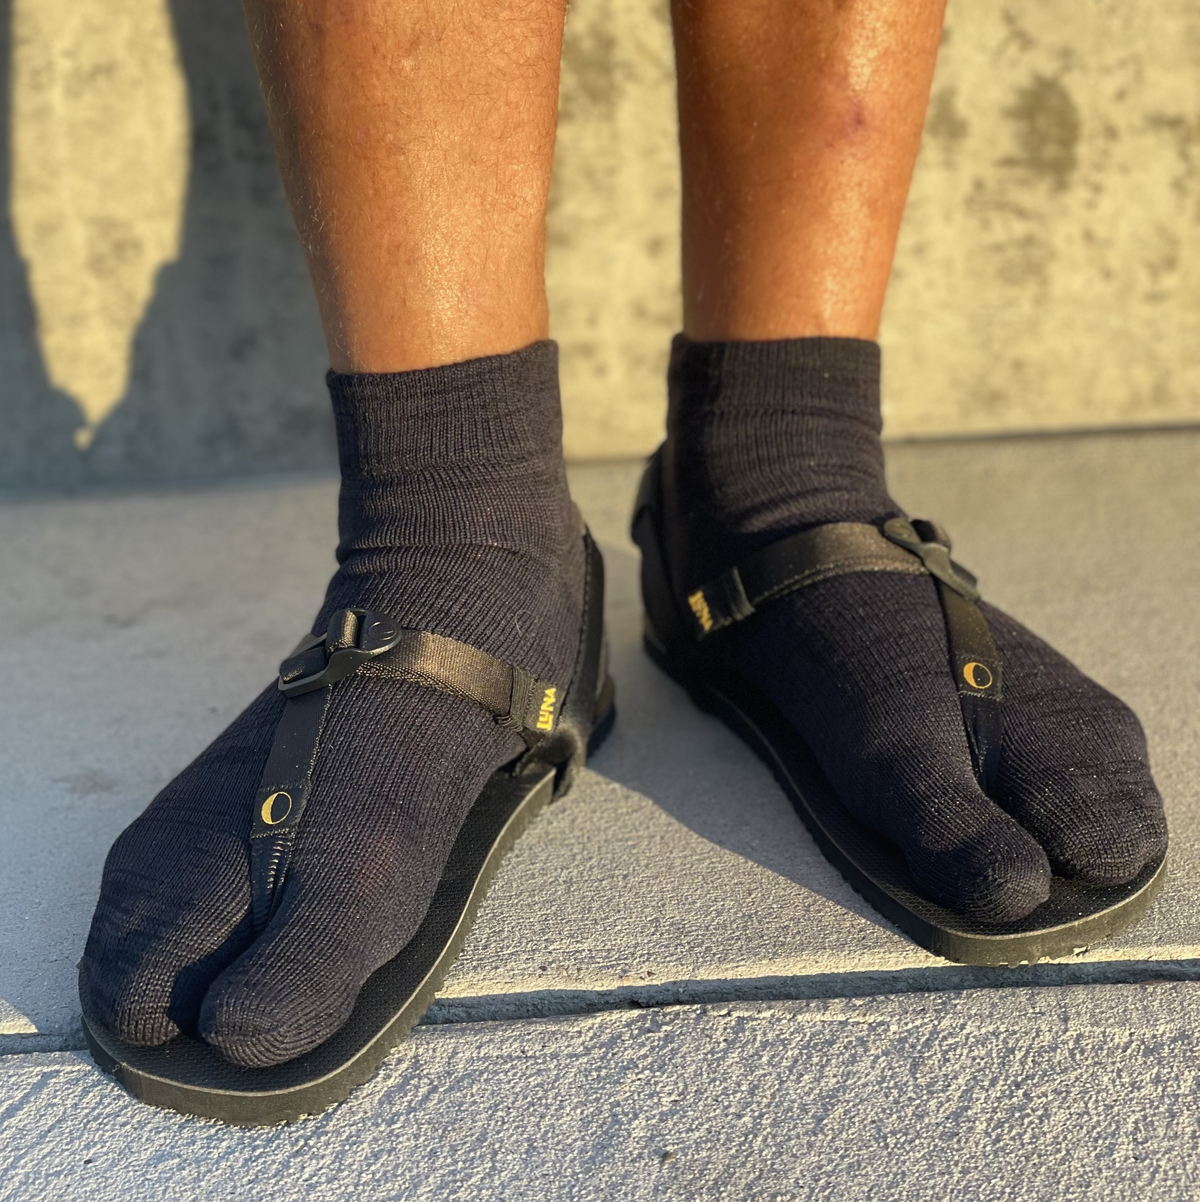 LUNA YUBI Tabi Socks - Merino Wool & Cordura - Ankle Length